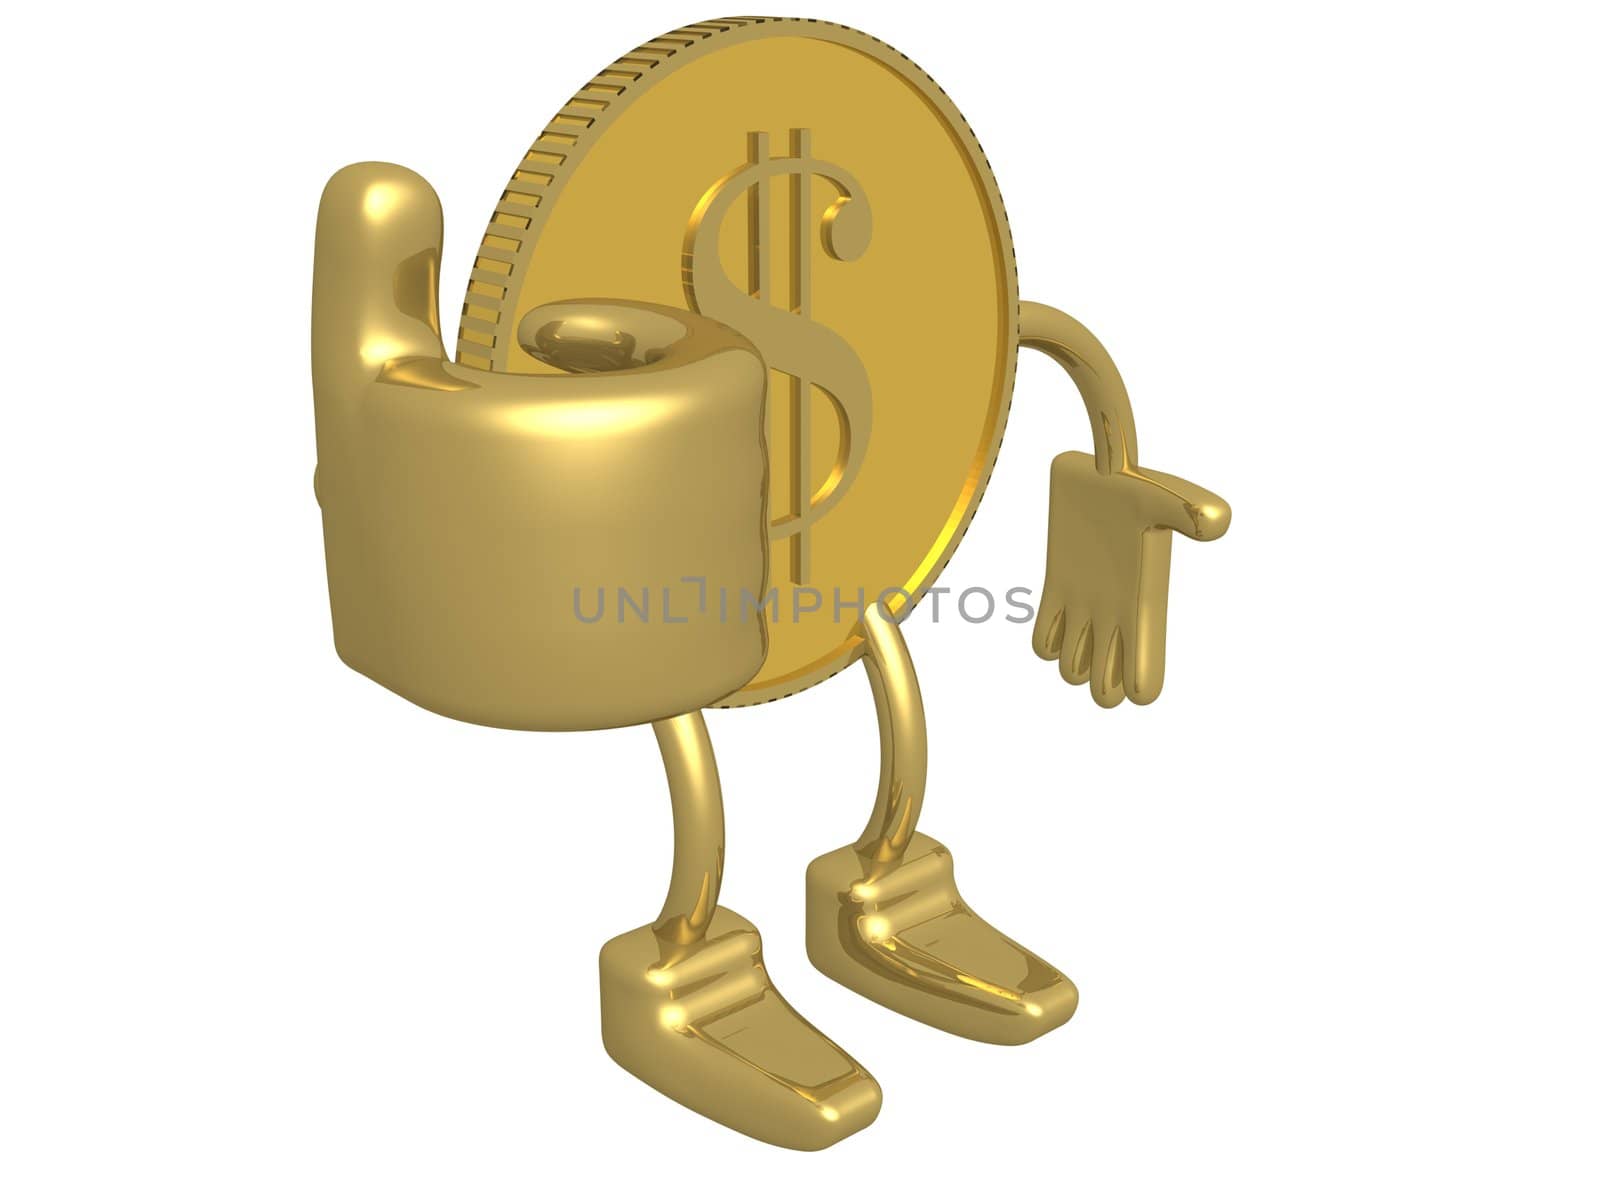 Gold dollar. A coin. 3D image.